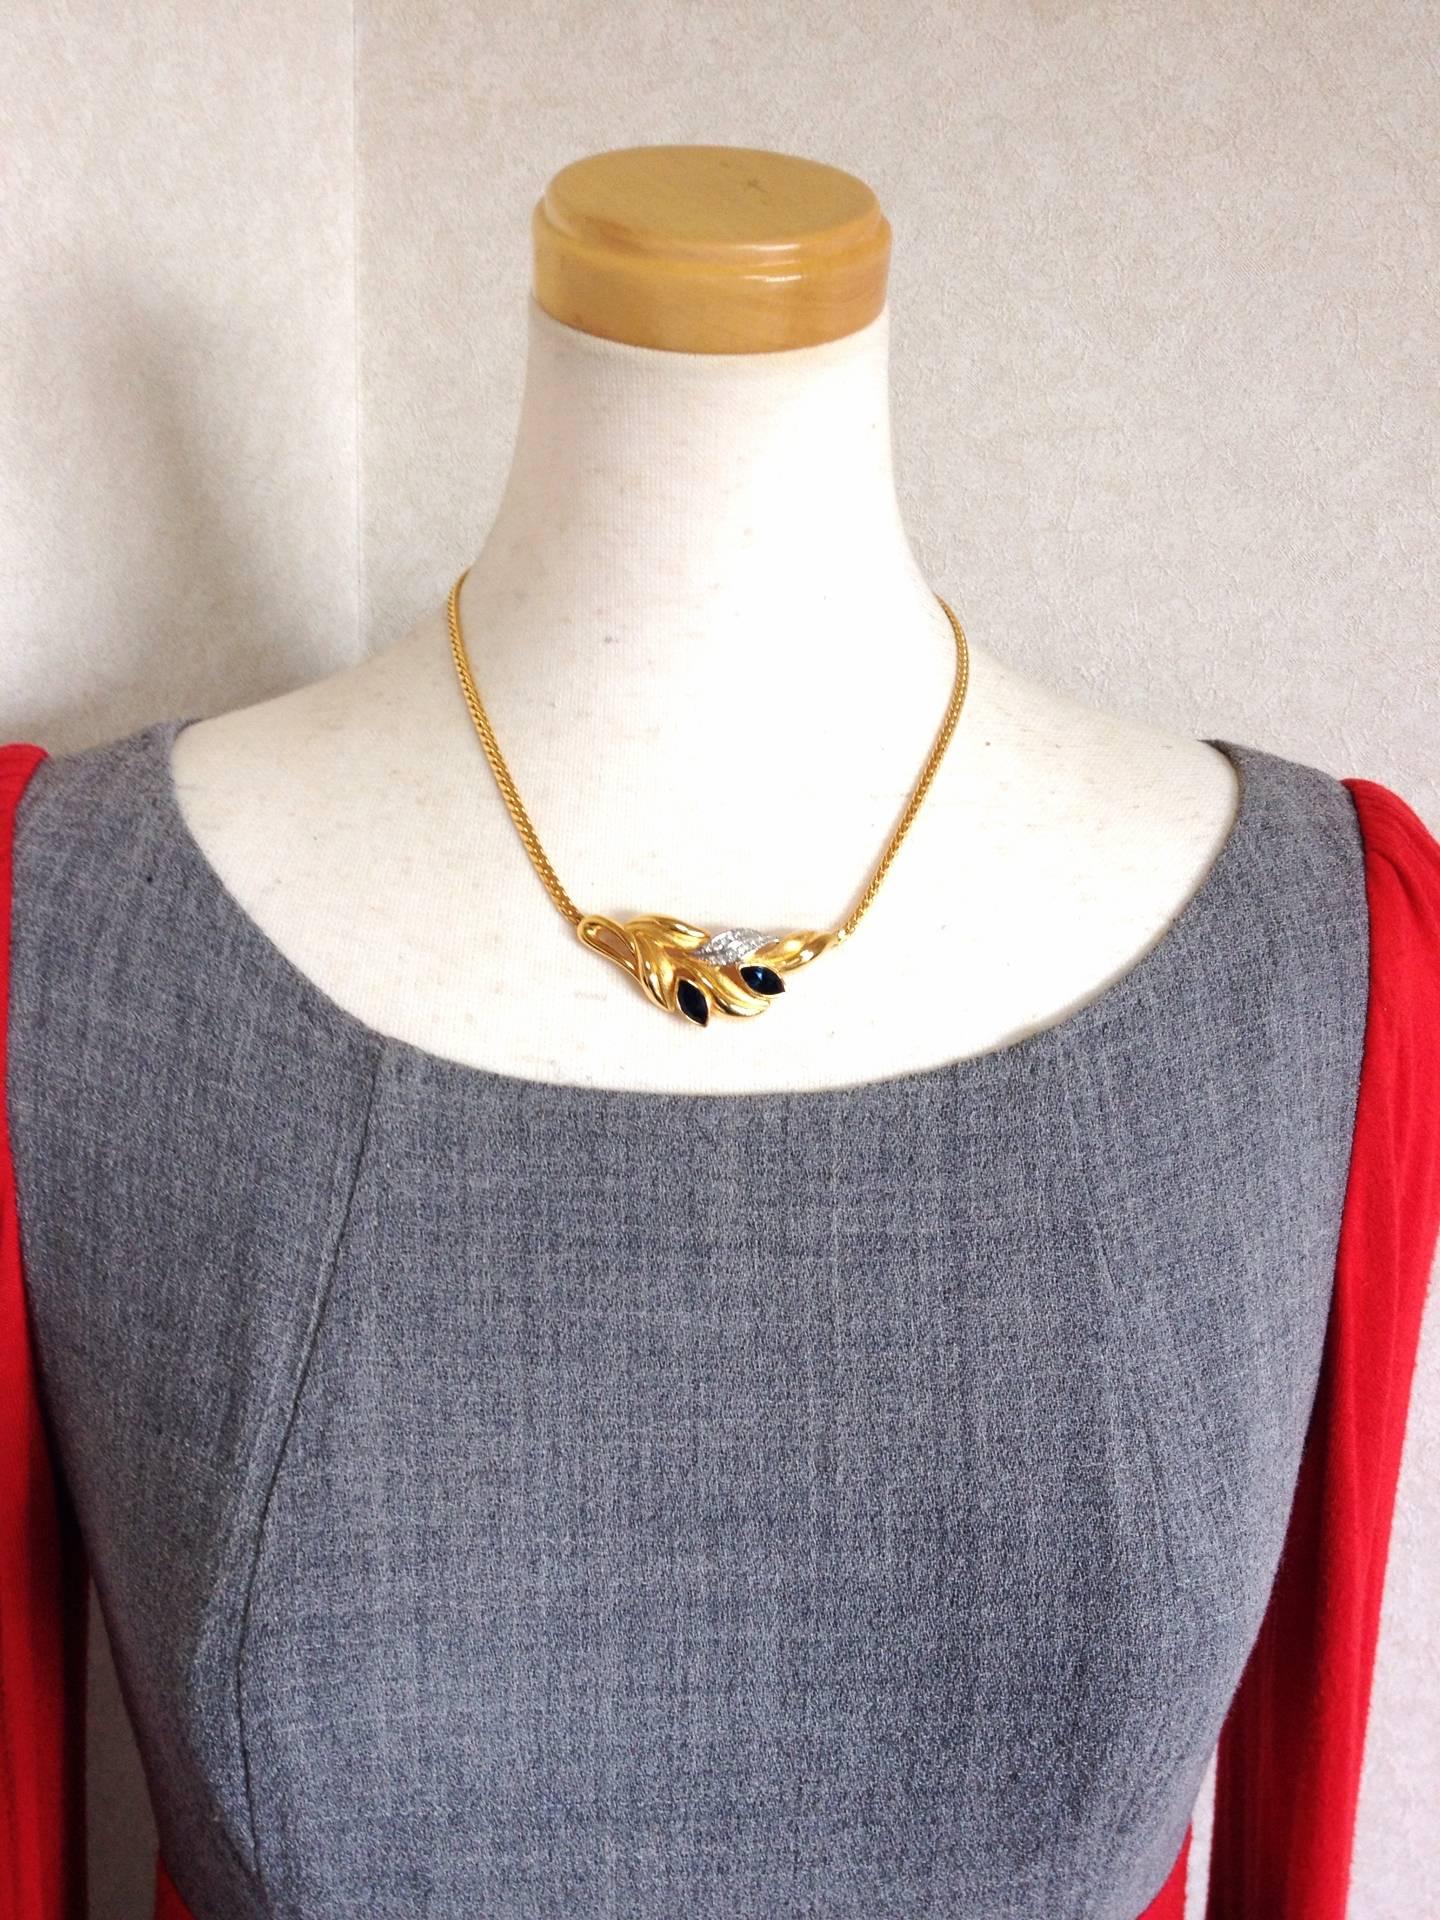 Vintage LANVIN golden chain skinny necklace with golden leaf motif pendant top For Sale 3